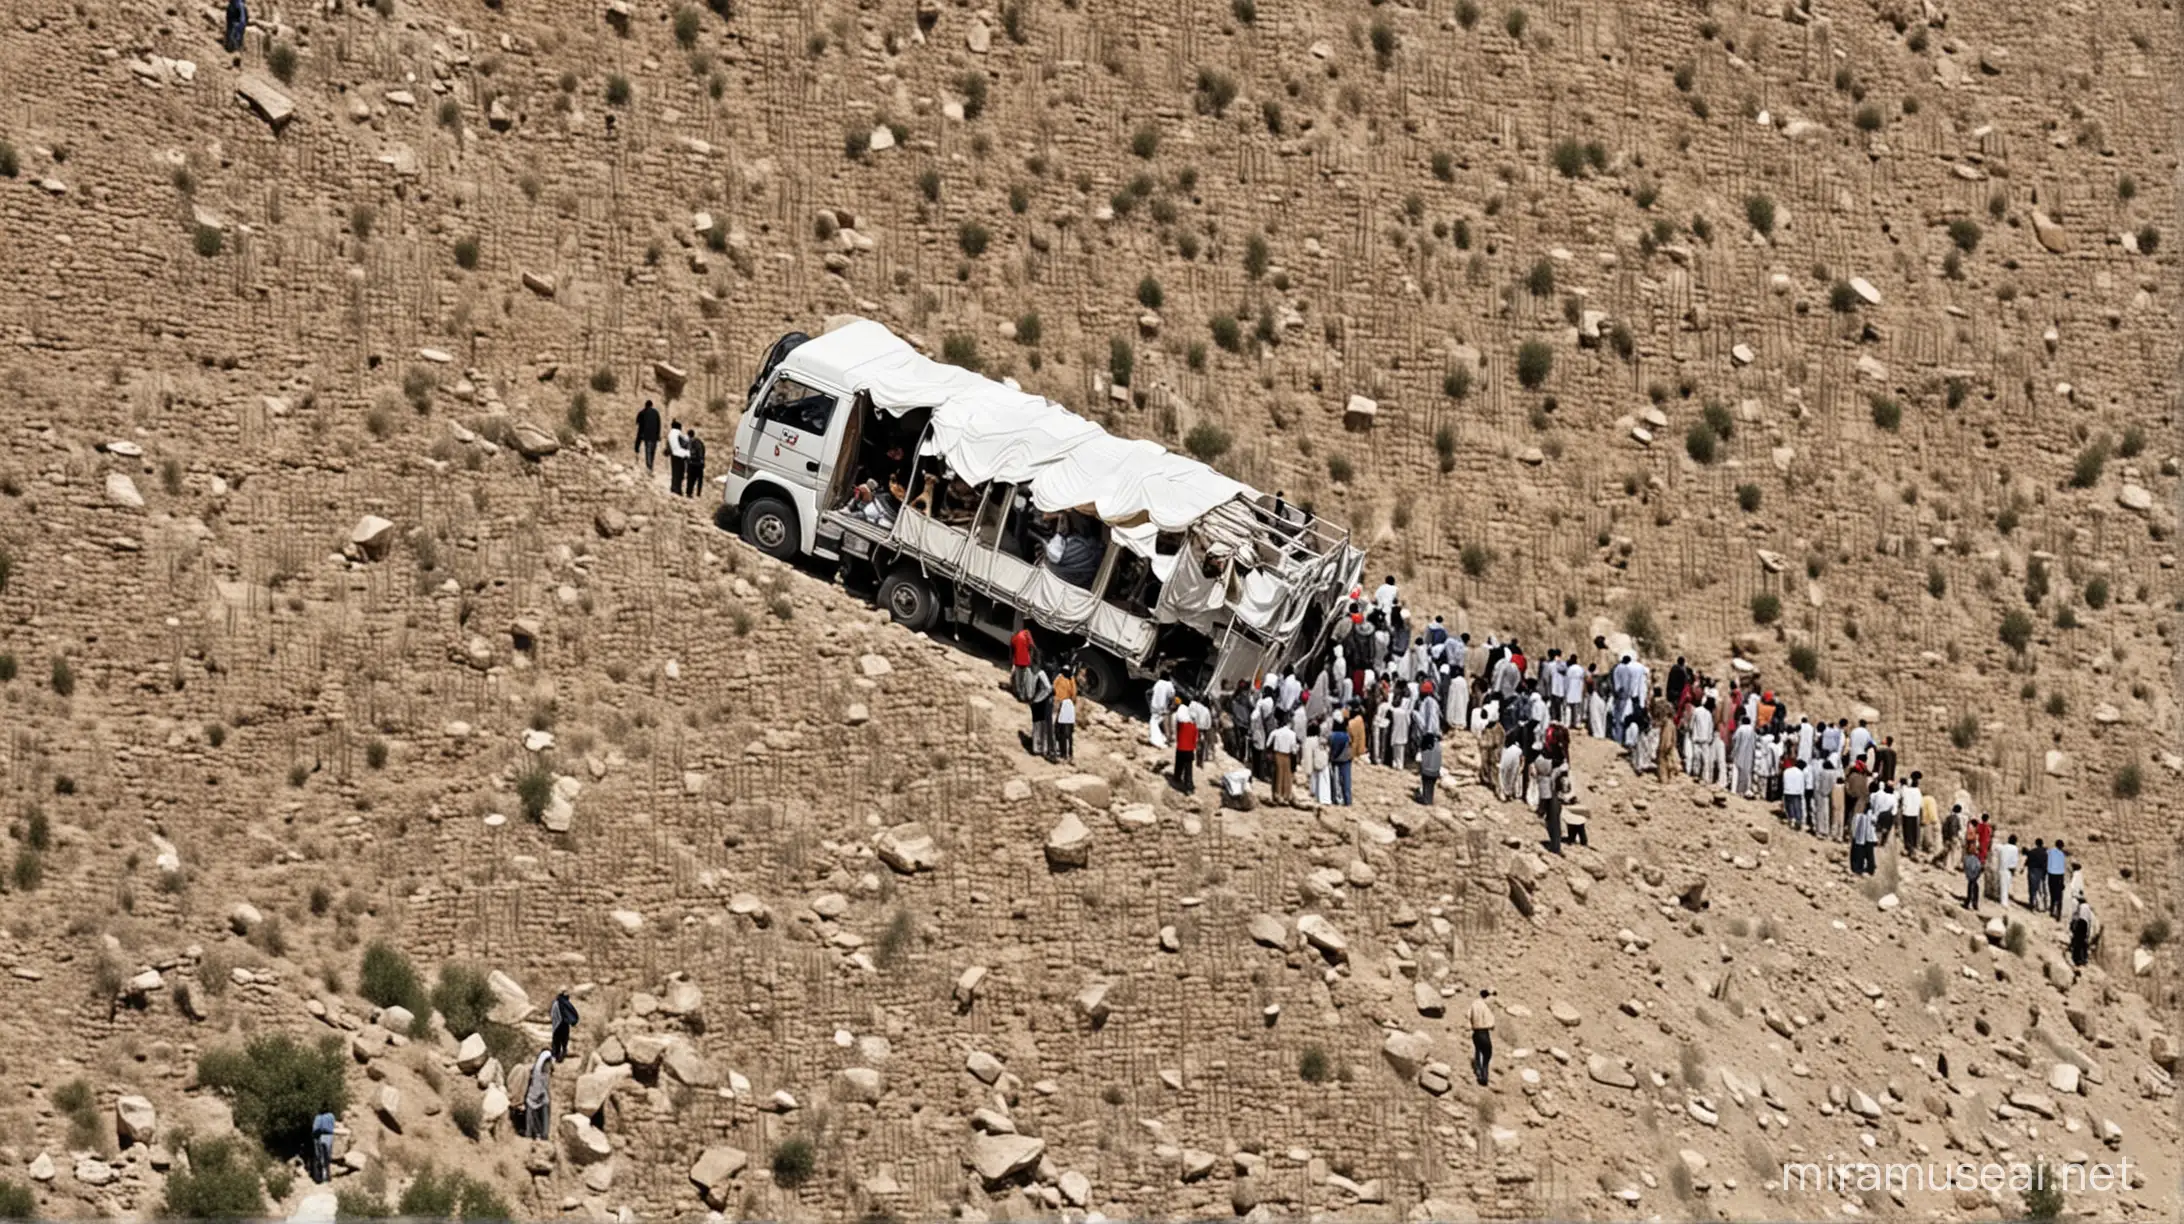 Truck Accident Pilgrims Tumble Into Ravine in Balochistan